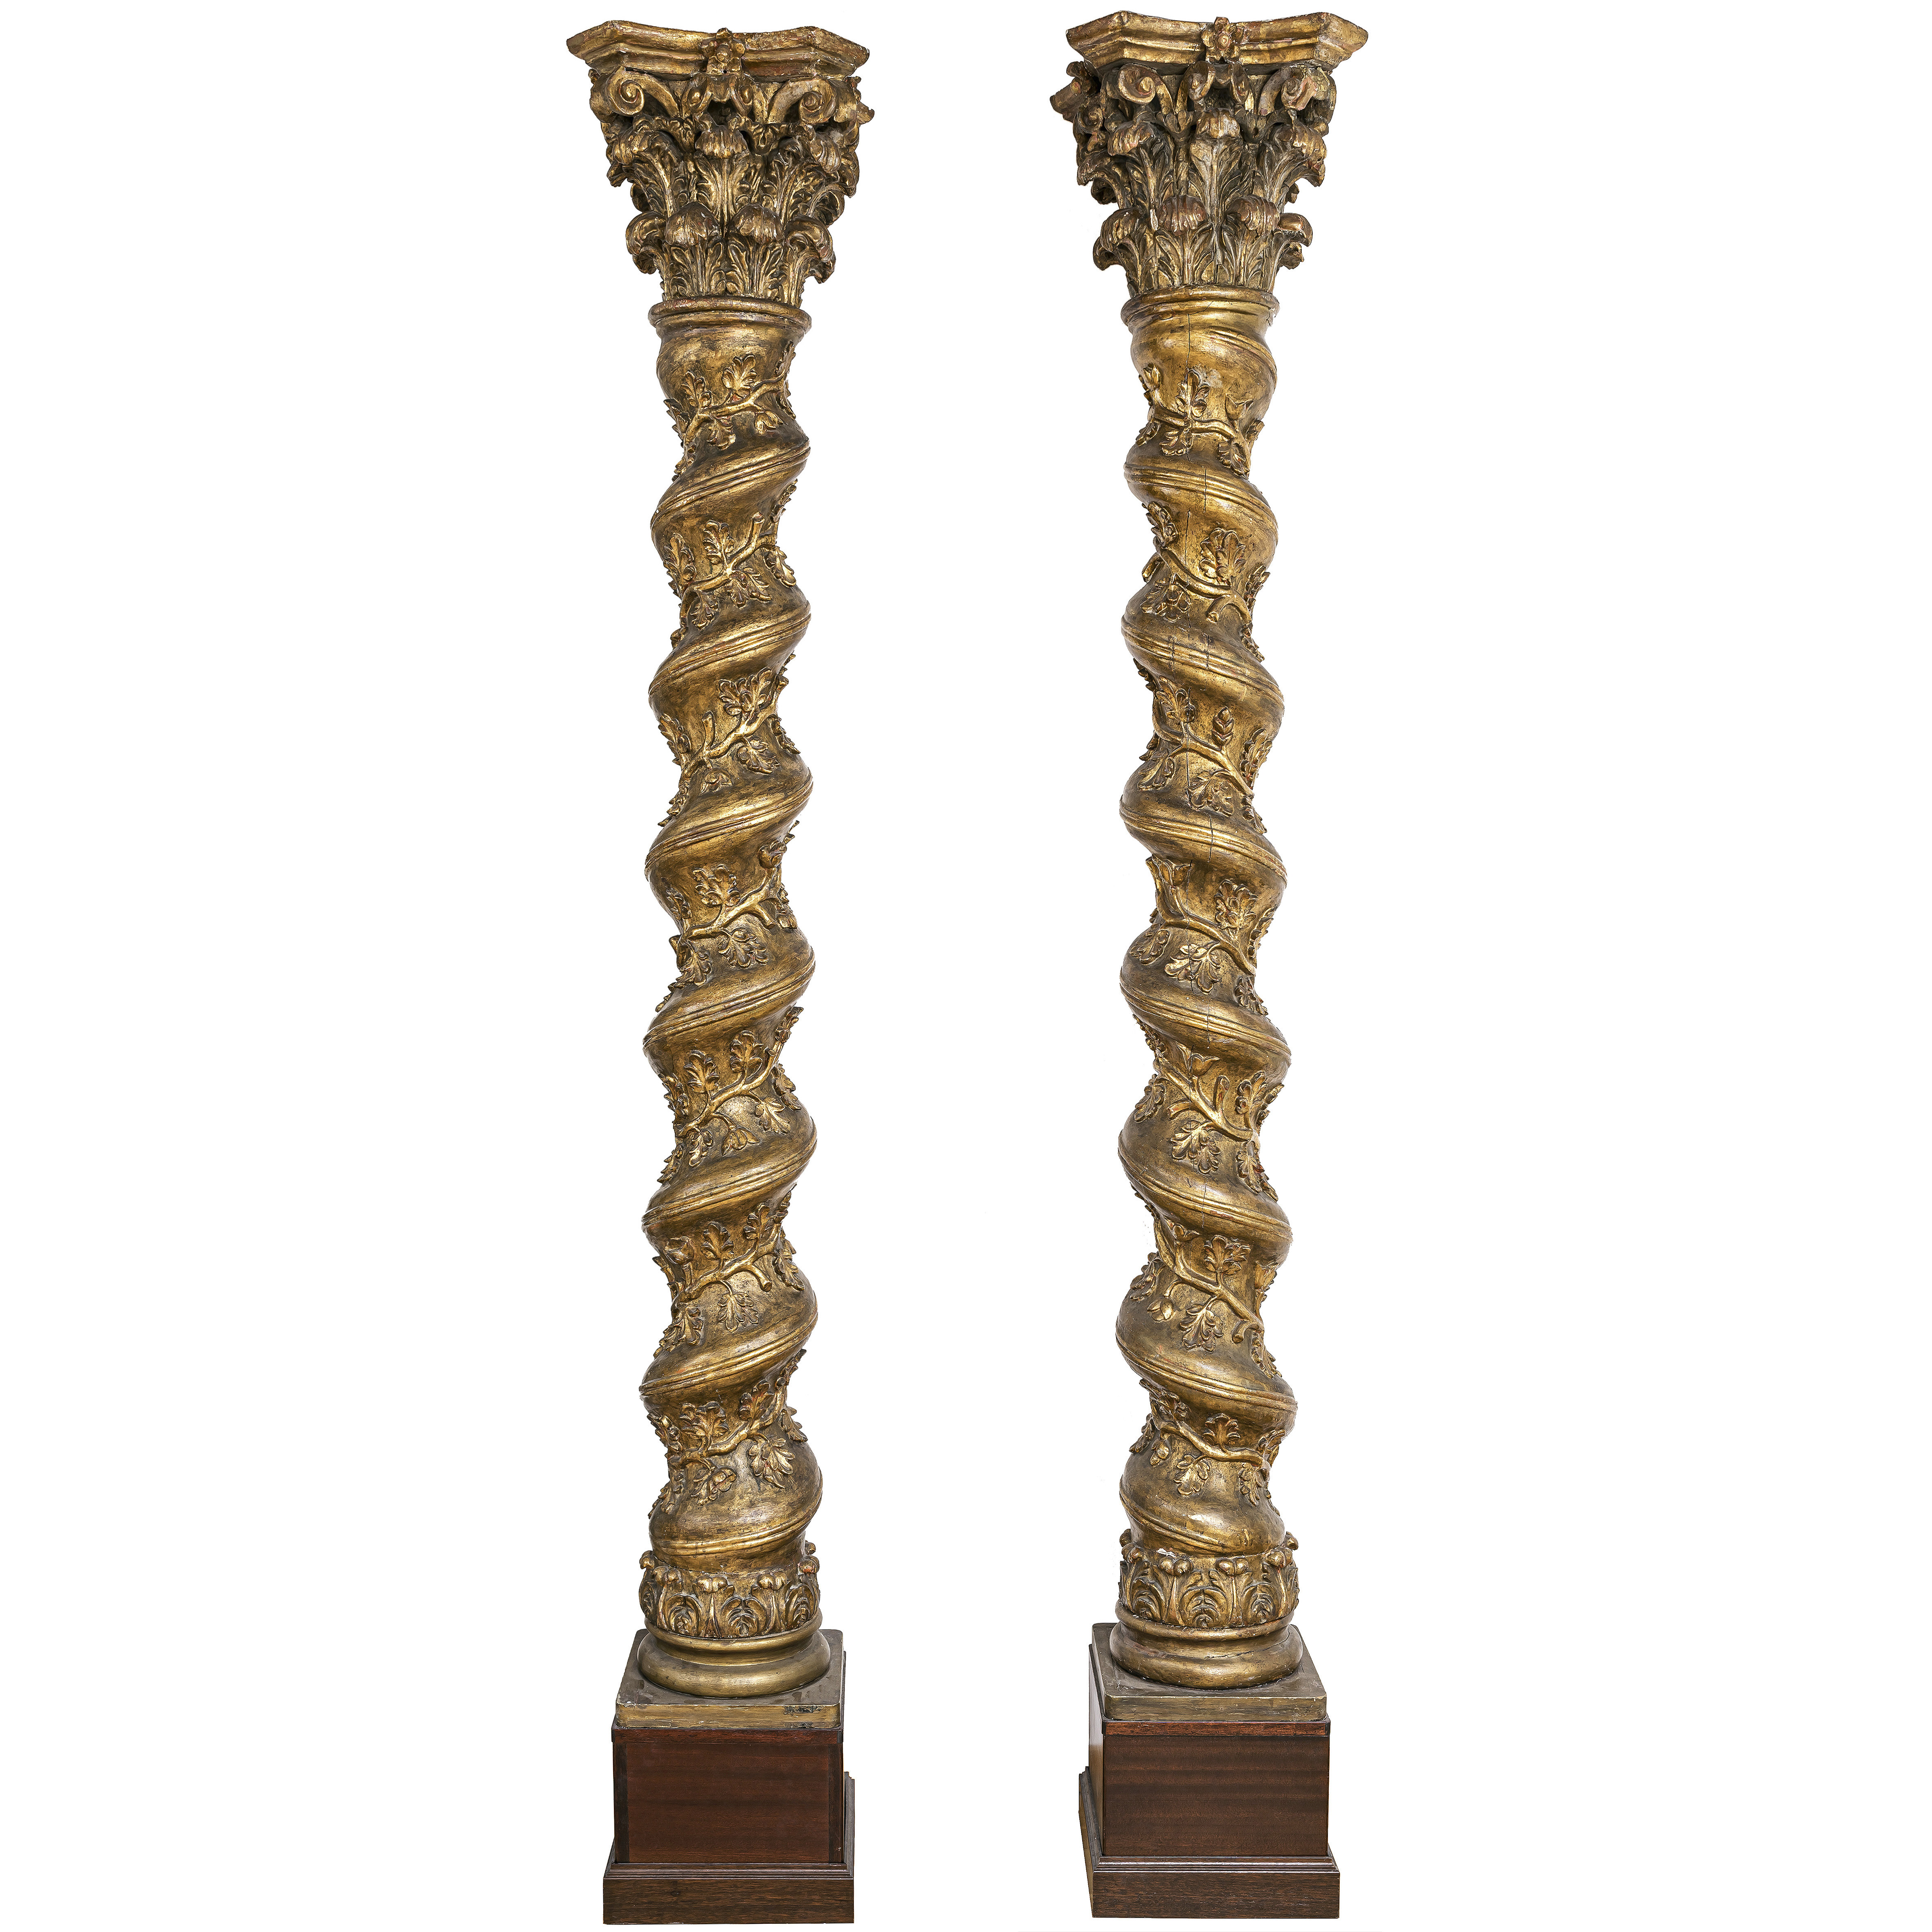 A pair of pillars - Italy, 17th/18th century